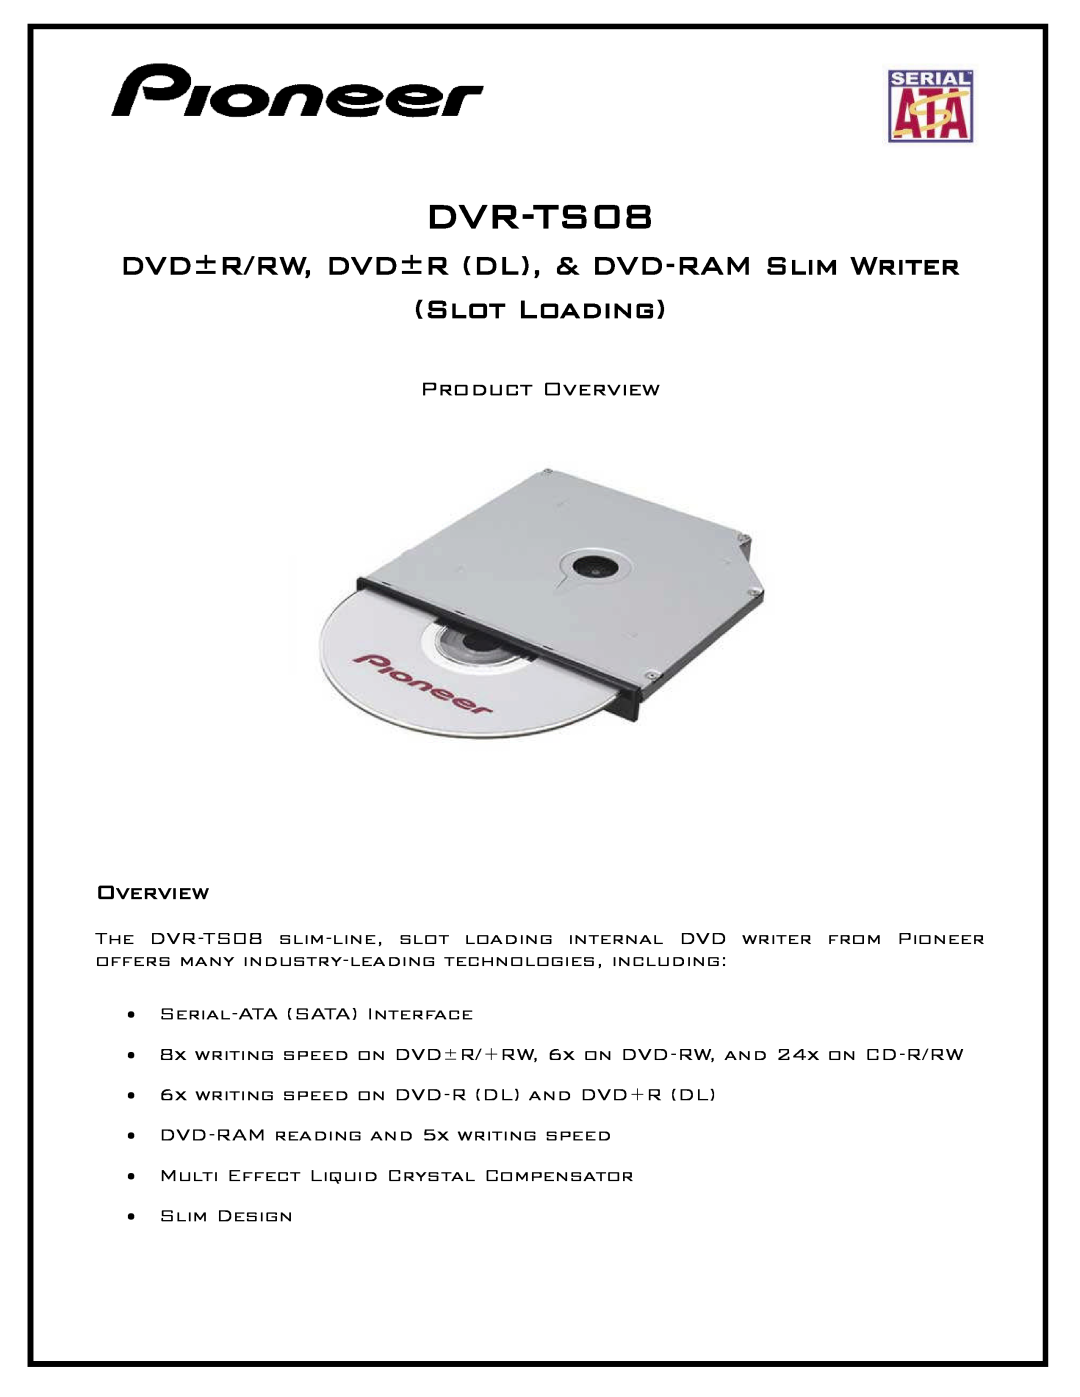 Pioneer DVR-TS08 manual DVD±R/RW, DVD±R DL, & DVD-RAM Slim Writer Slot Loading, Product Overview 